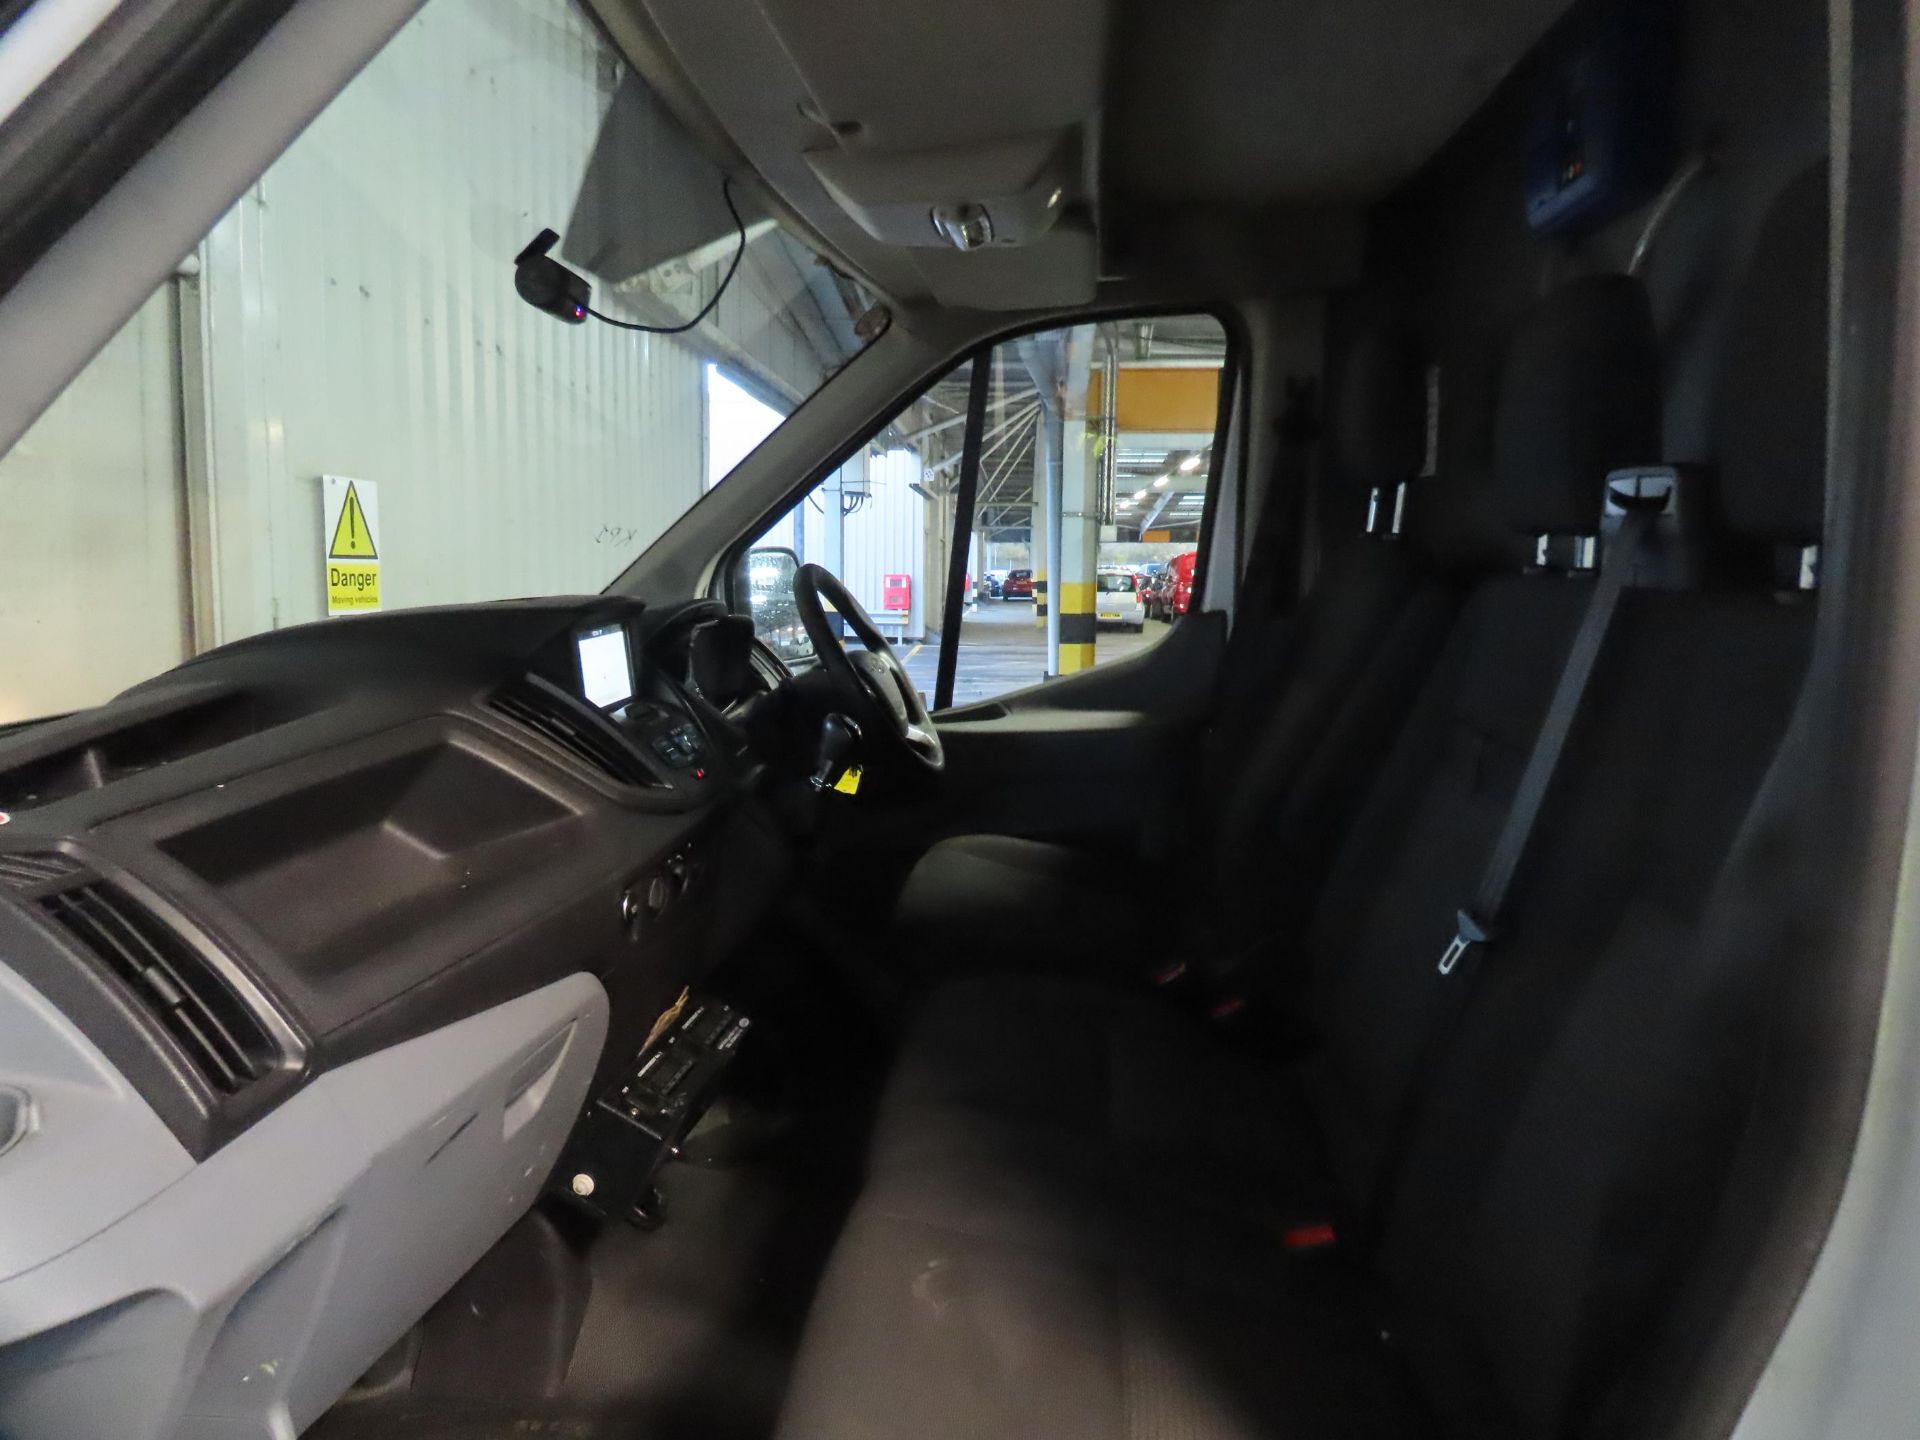 Ford Transit 2.2 TDCI EcoBlue 130 L3 H3 2018 '67 Reg' A/C - Panel Van - ULEZ Compliant - Image 10 of 11